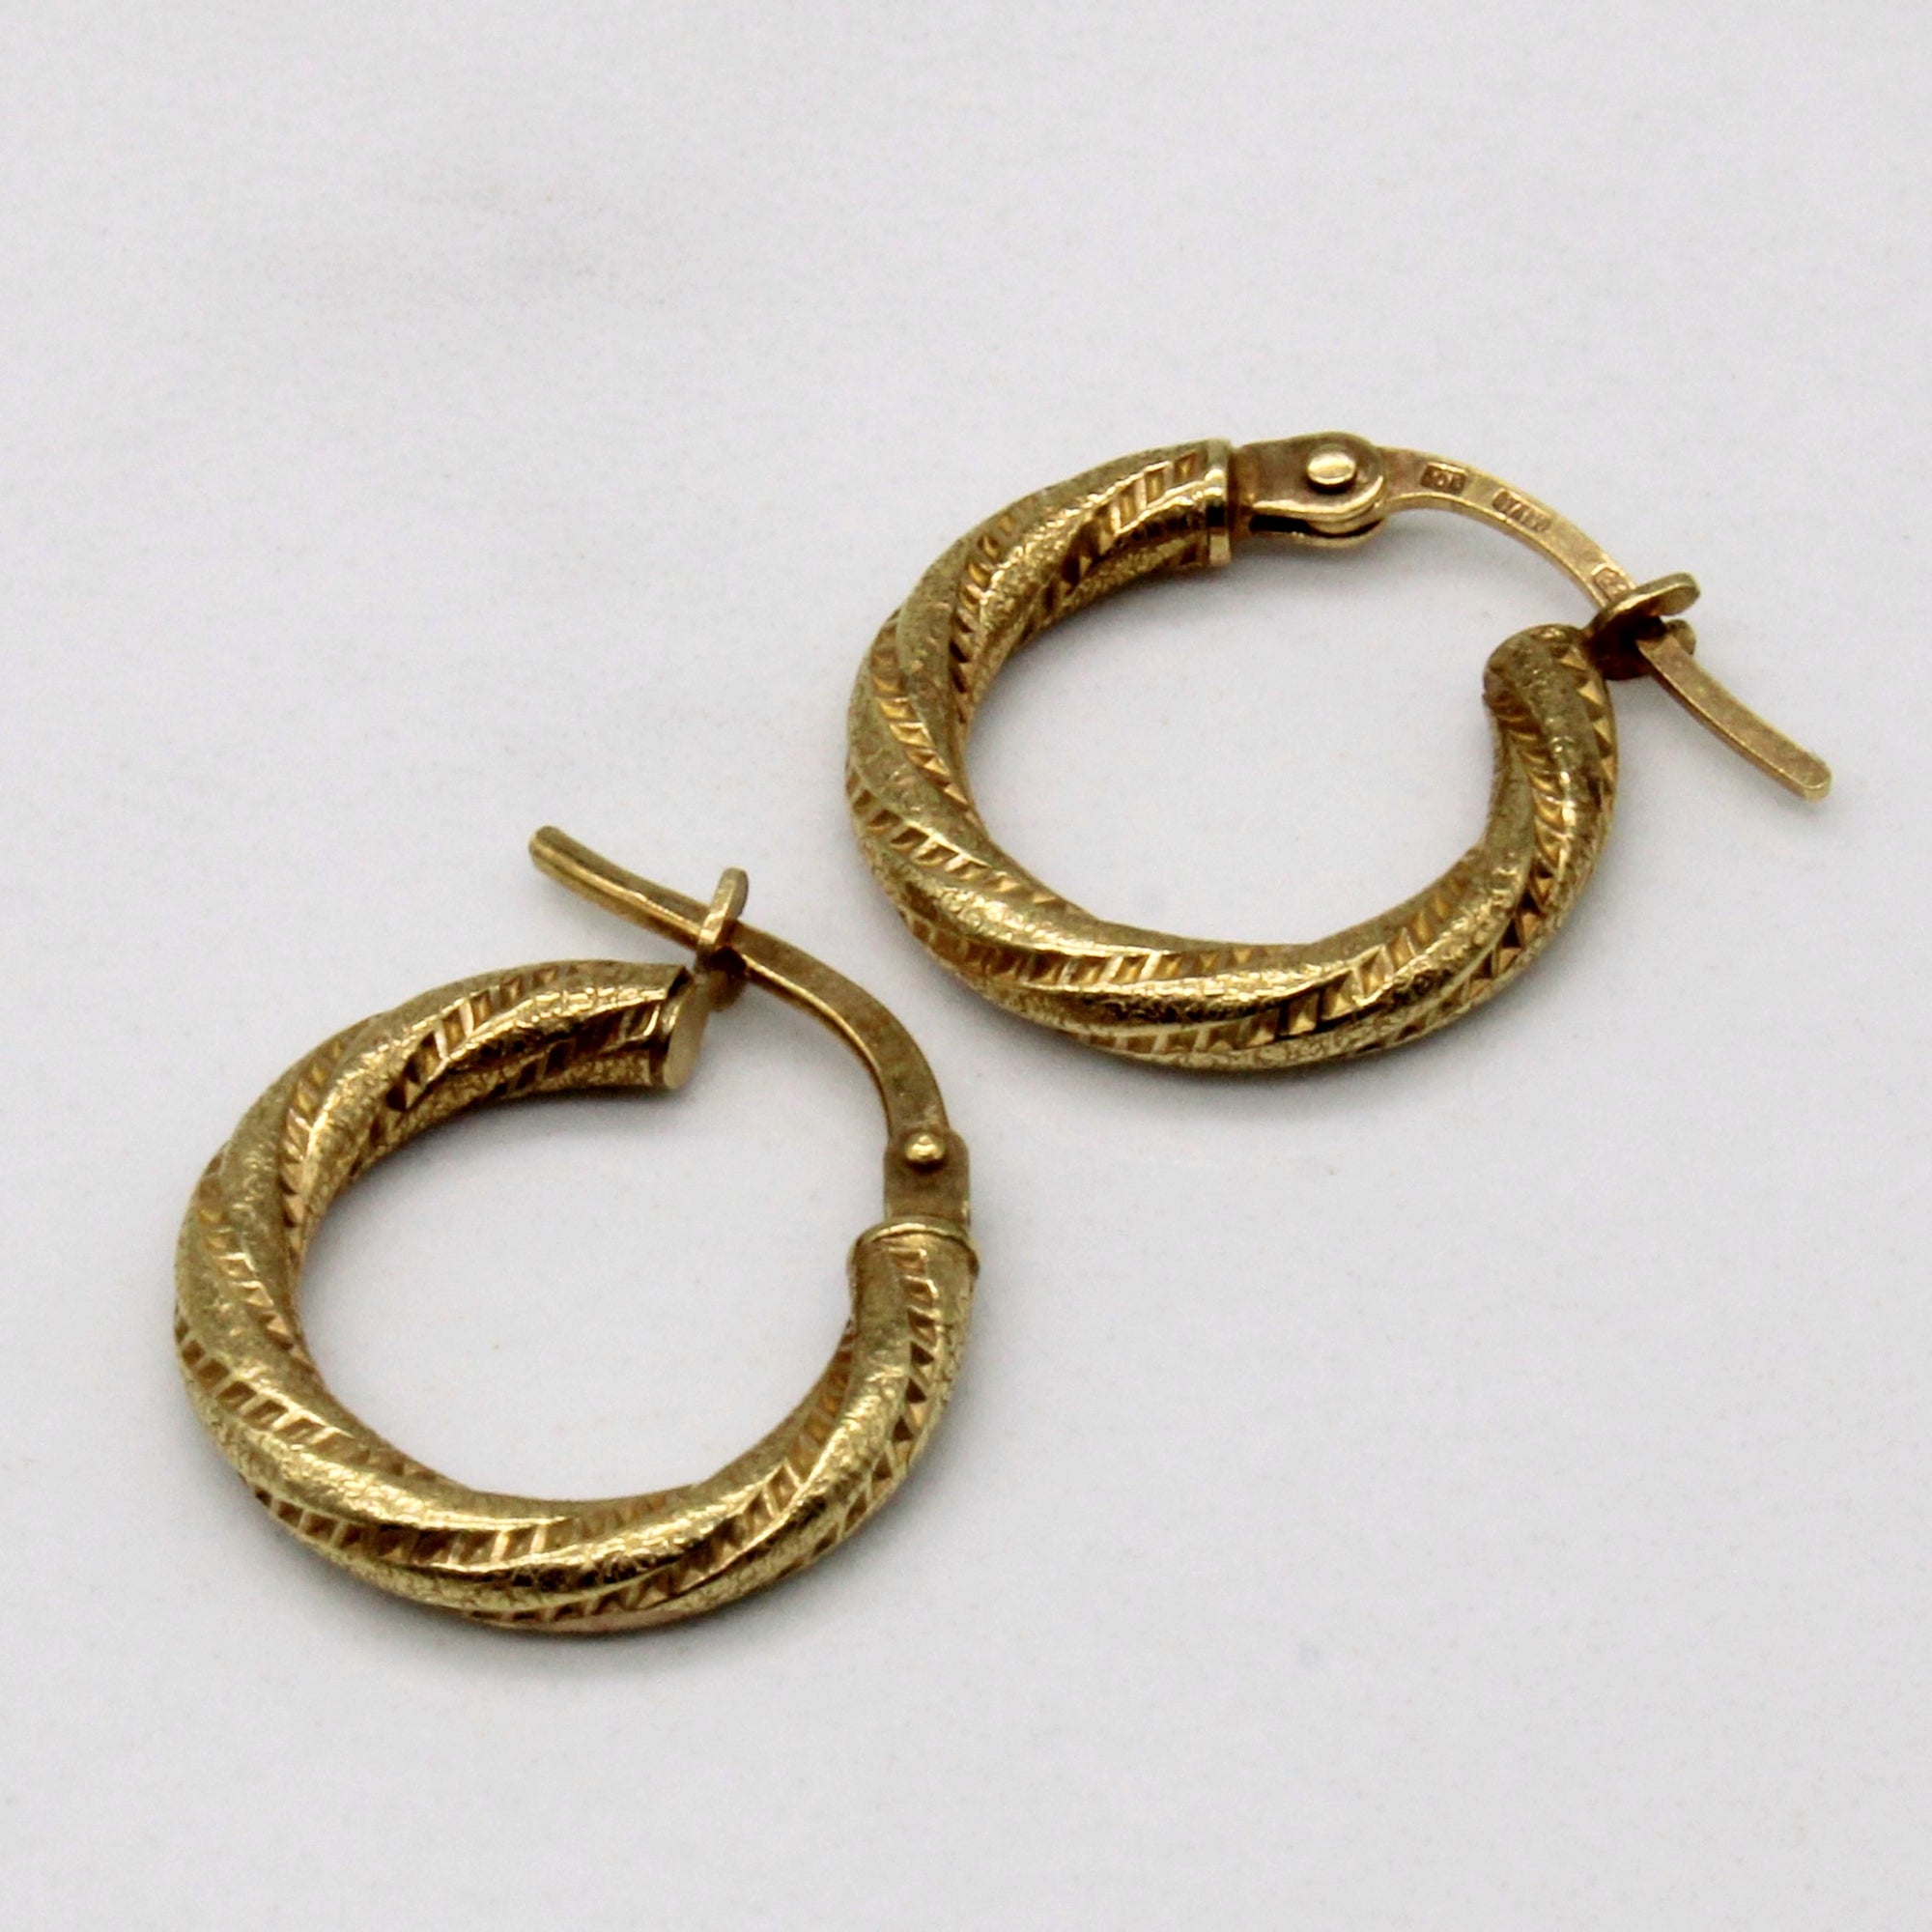 10k Yellow Gold Twisted Hoop Earrings